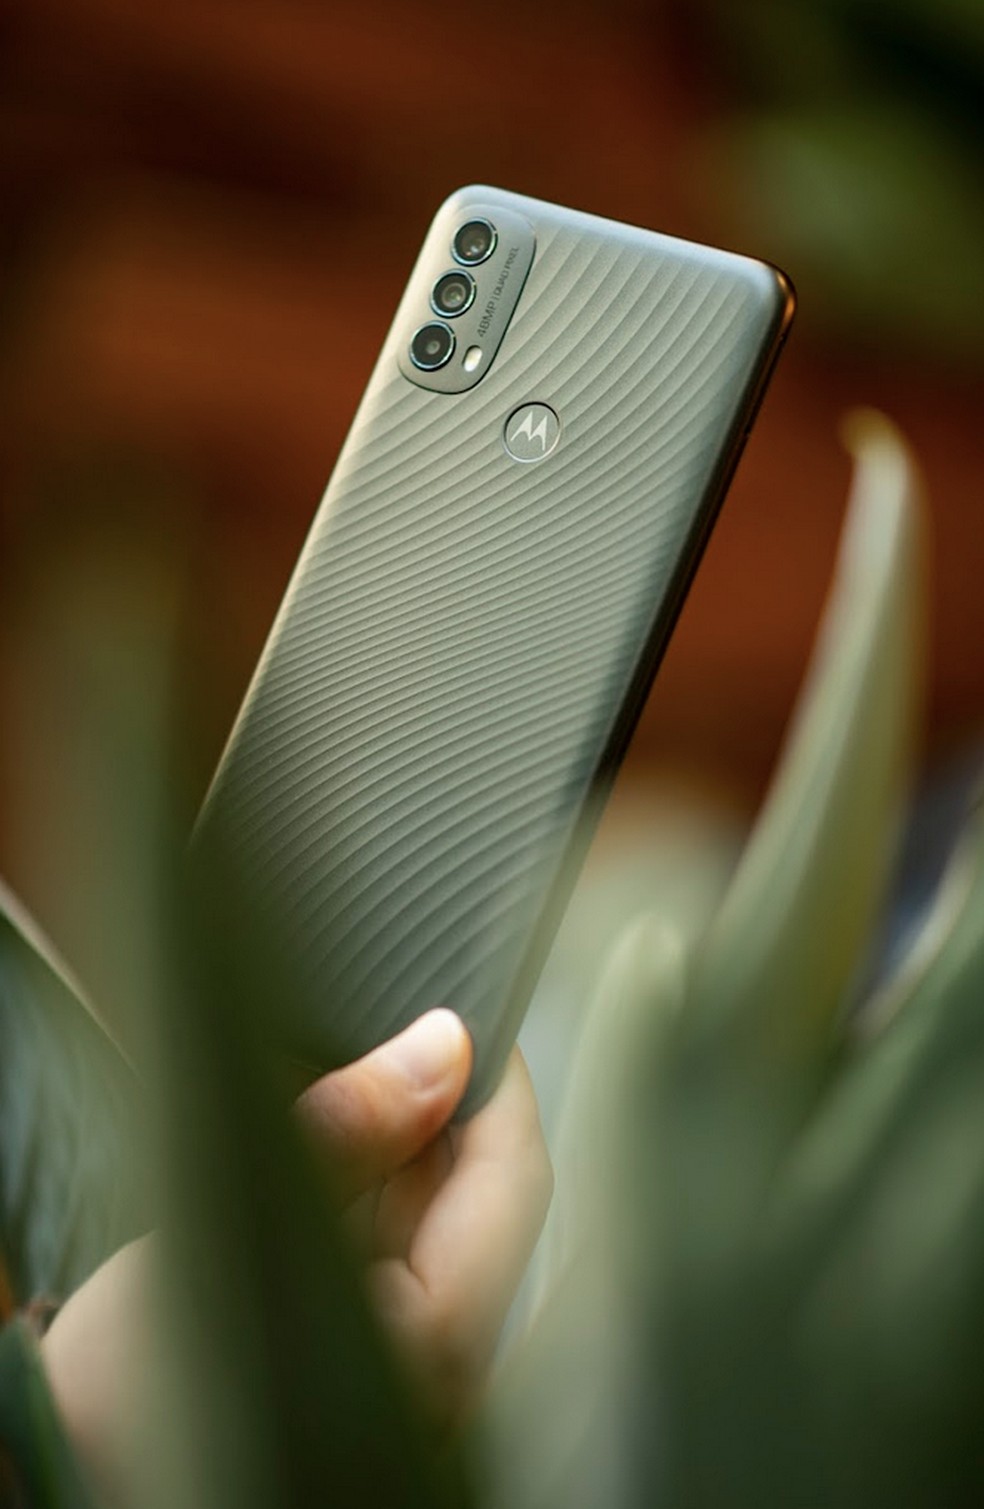 Smartphone Motorola Moto E40, Rosê, 64GB